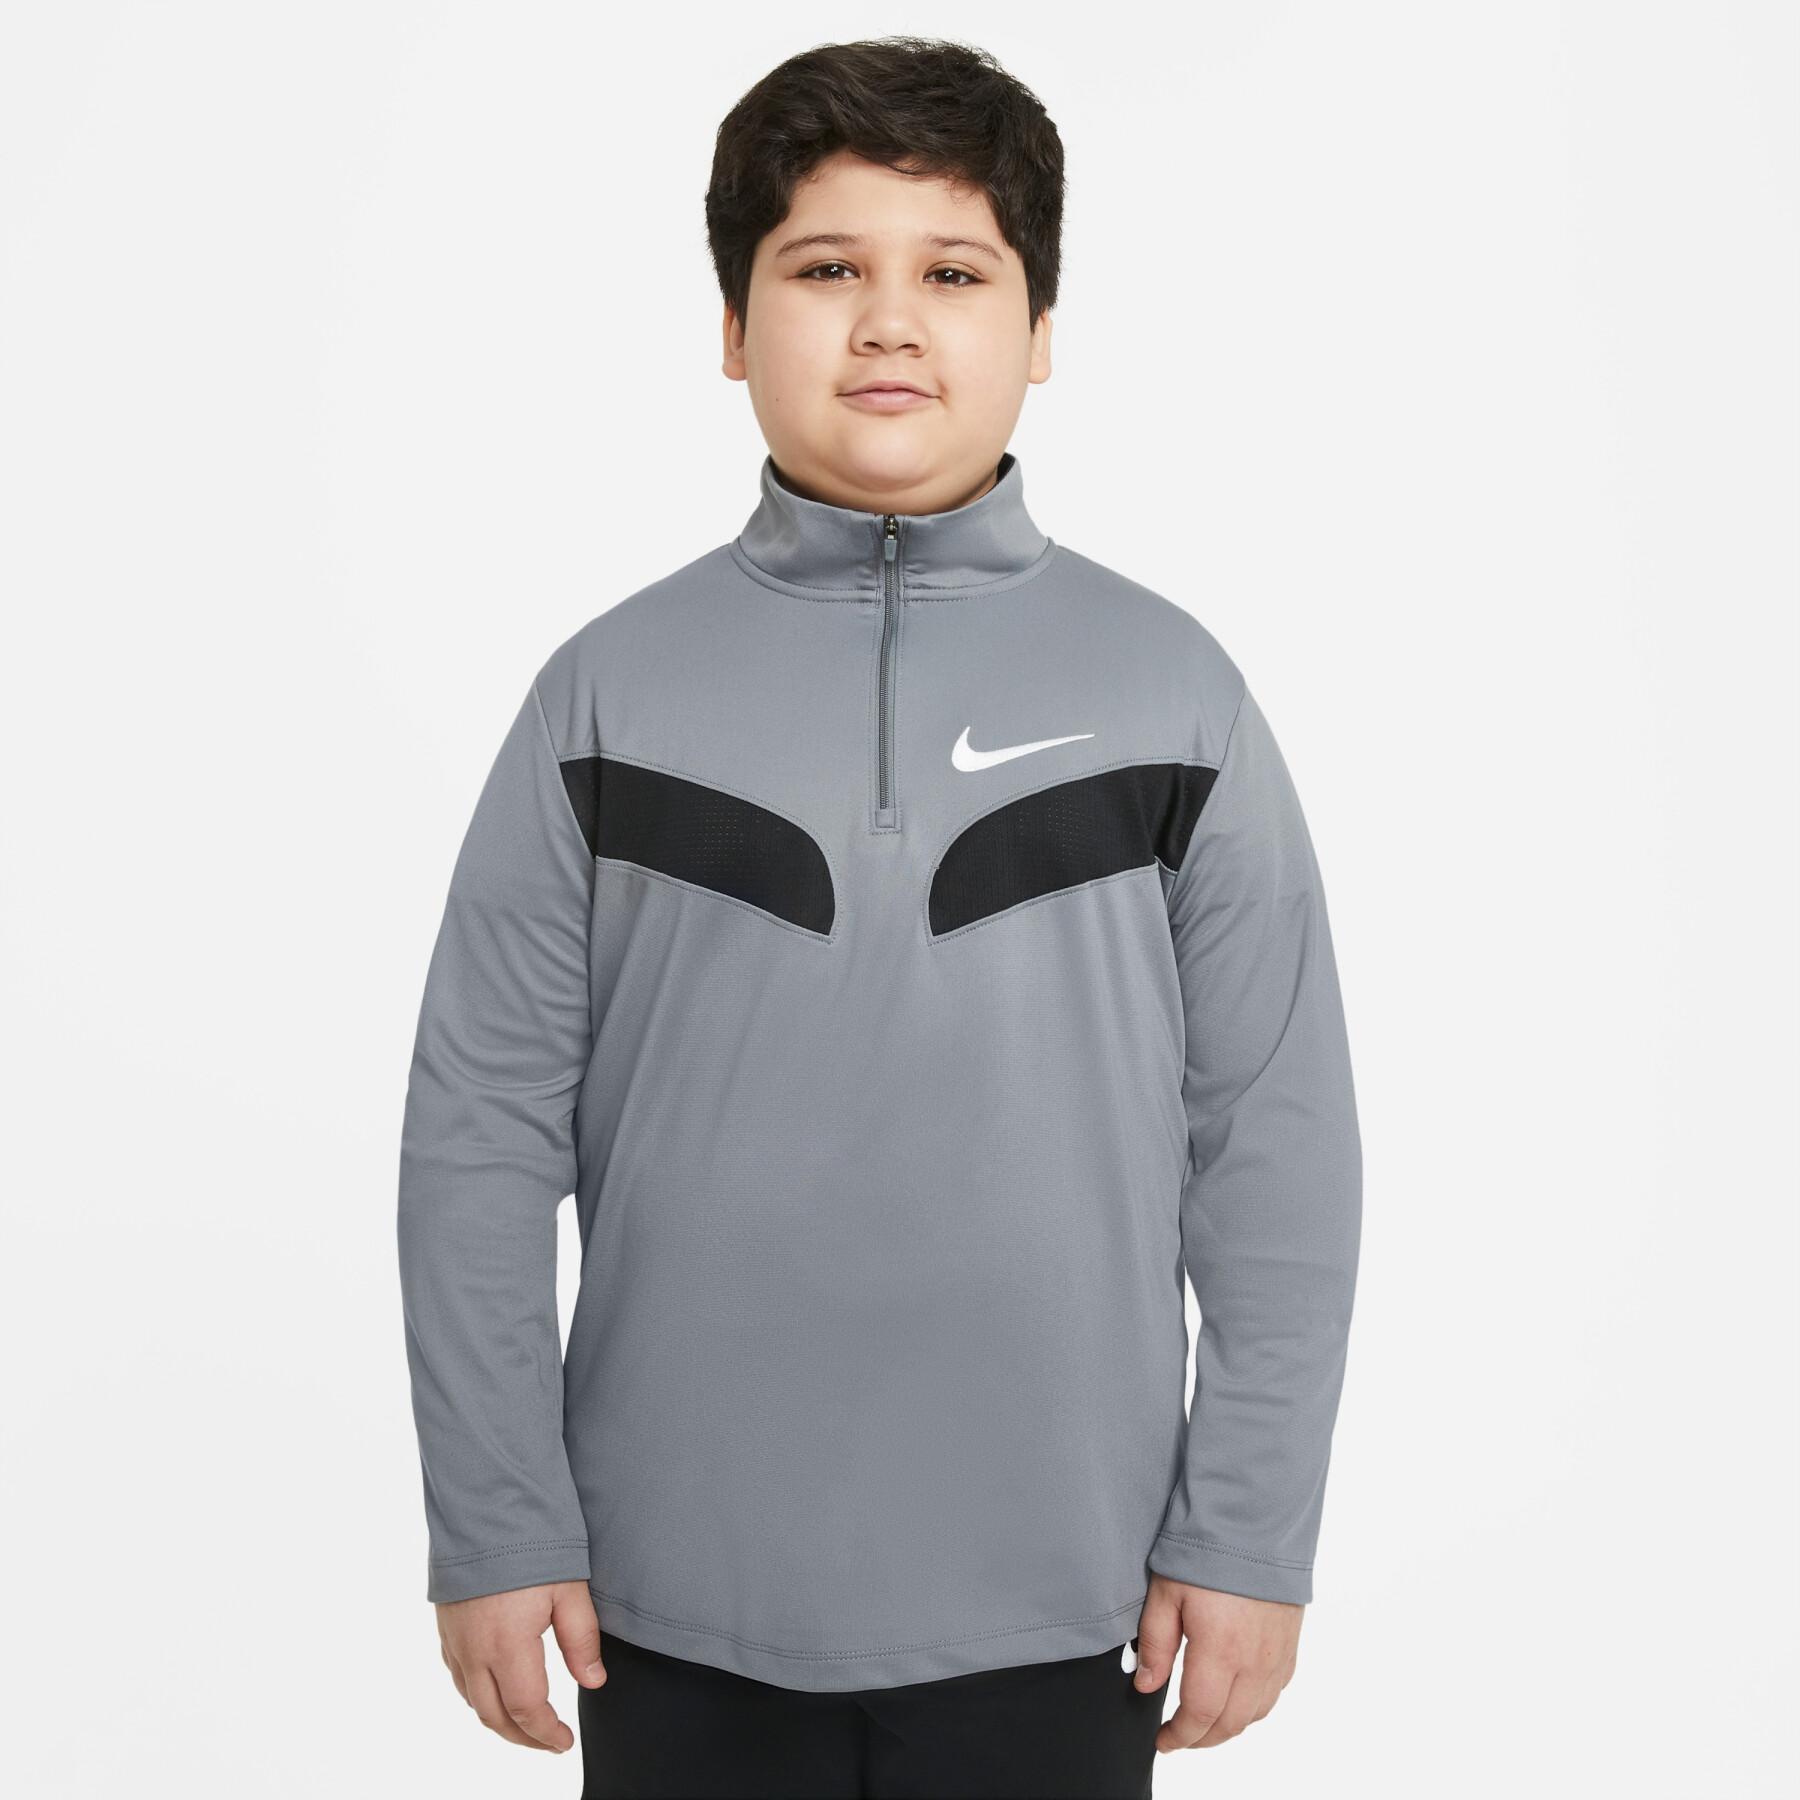 Children's jacket Nike Sport